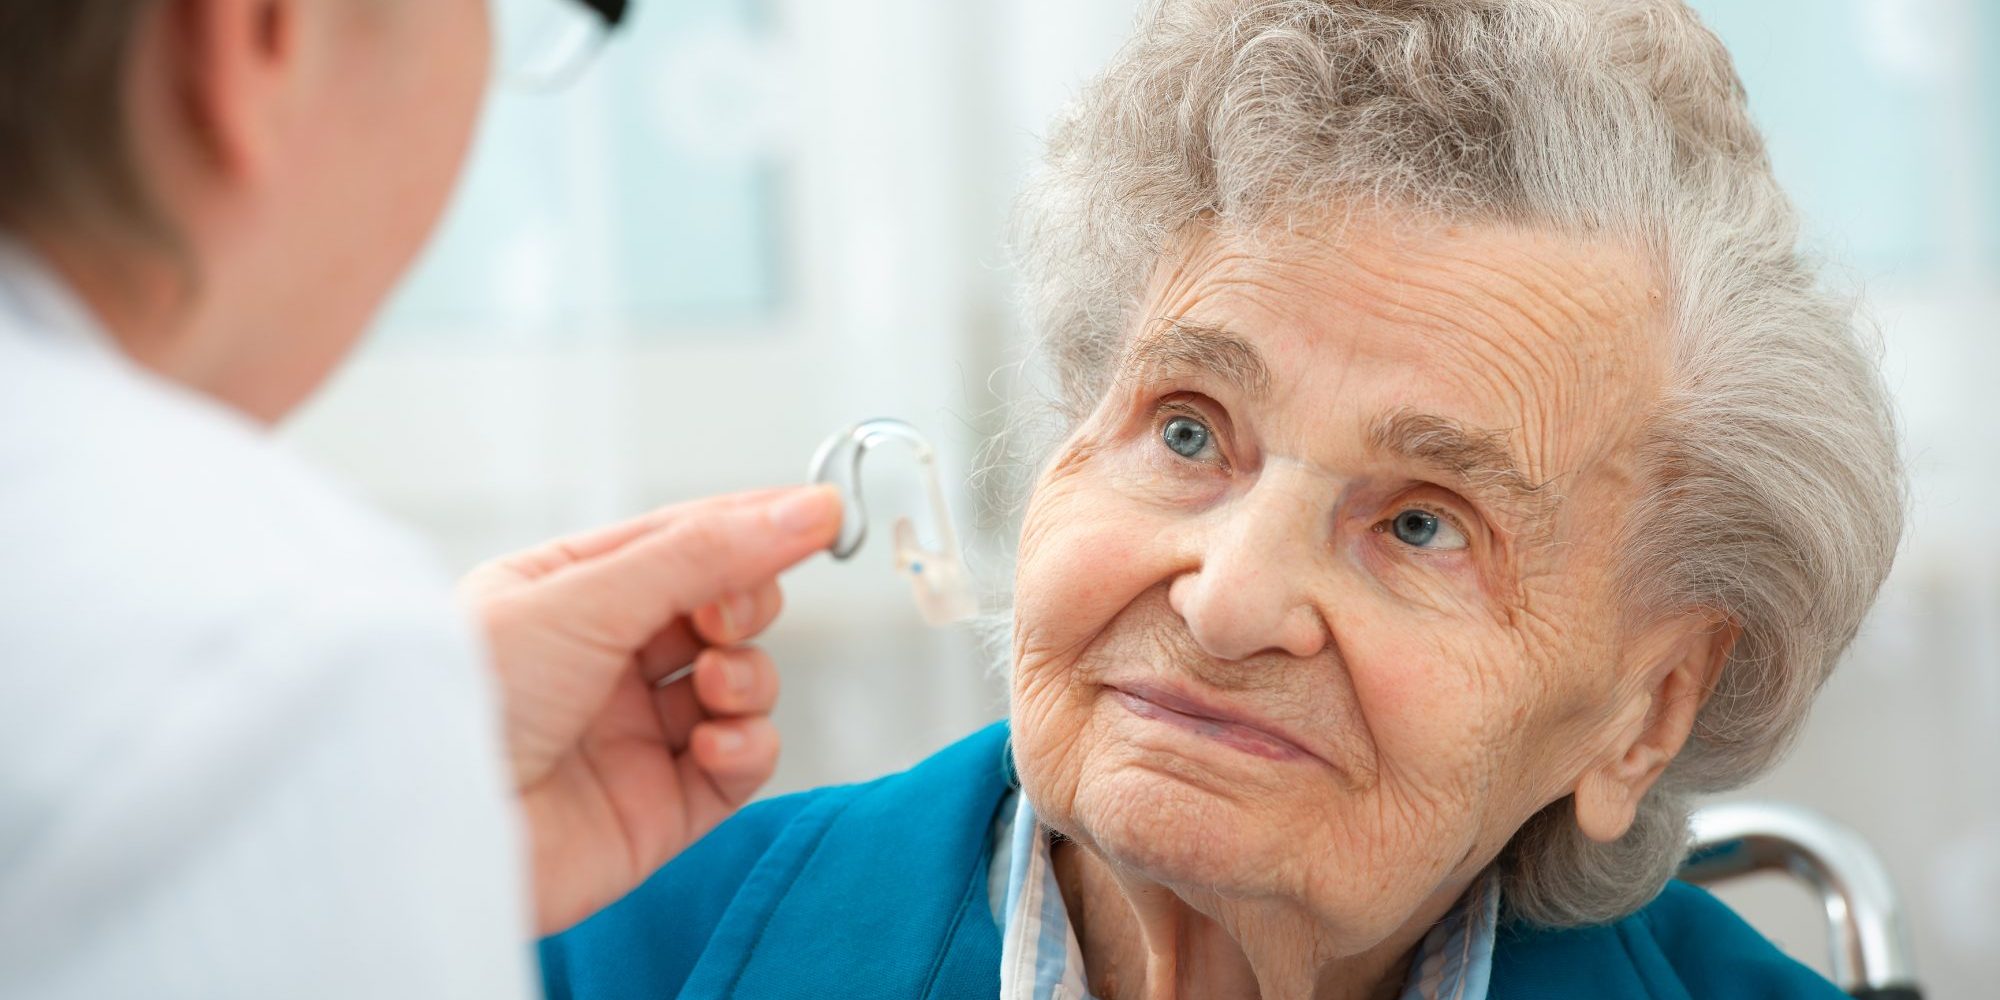 Hearing Aid elder